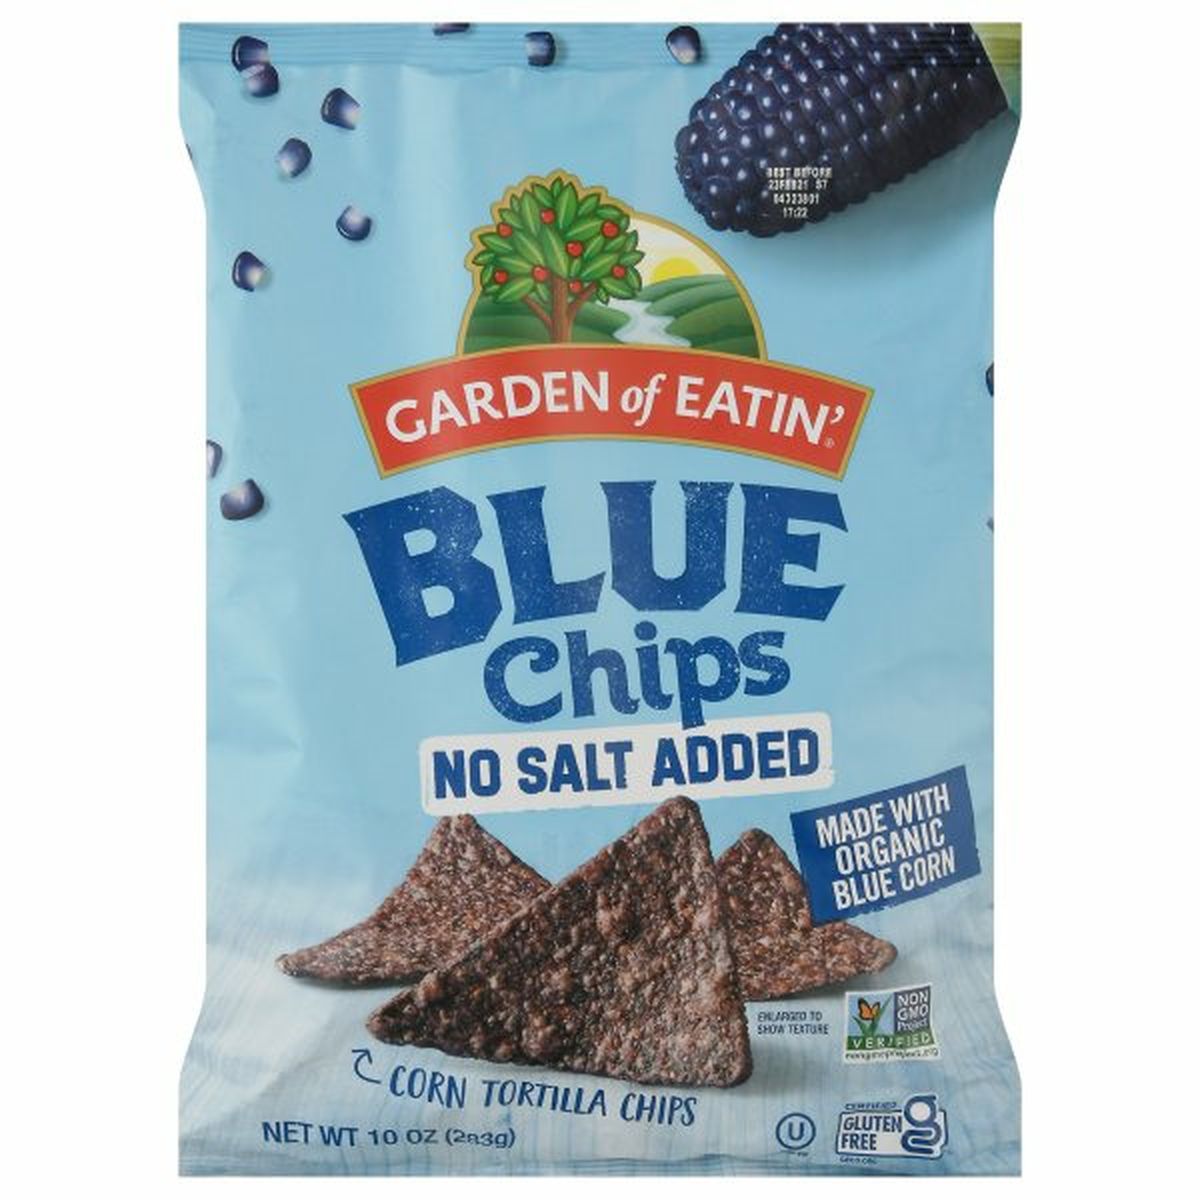 Calories in Garden of Eatin' Blue Chips, No Salt Added